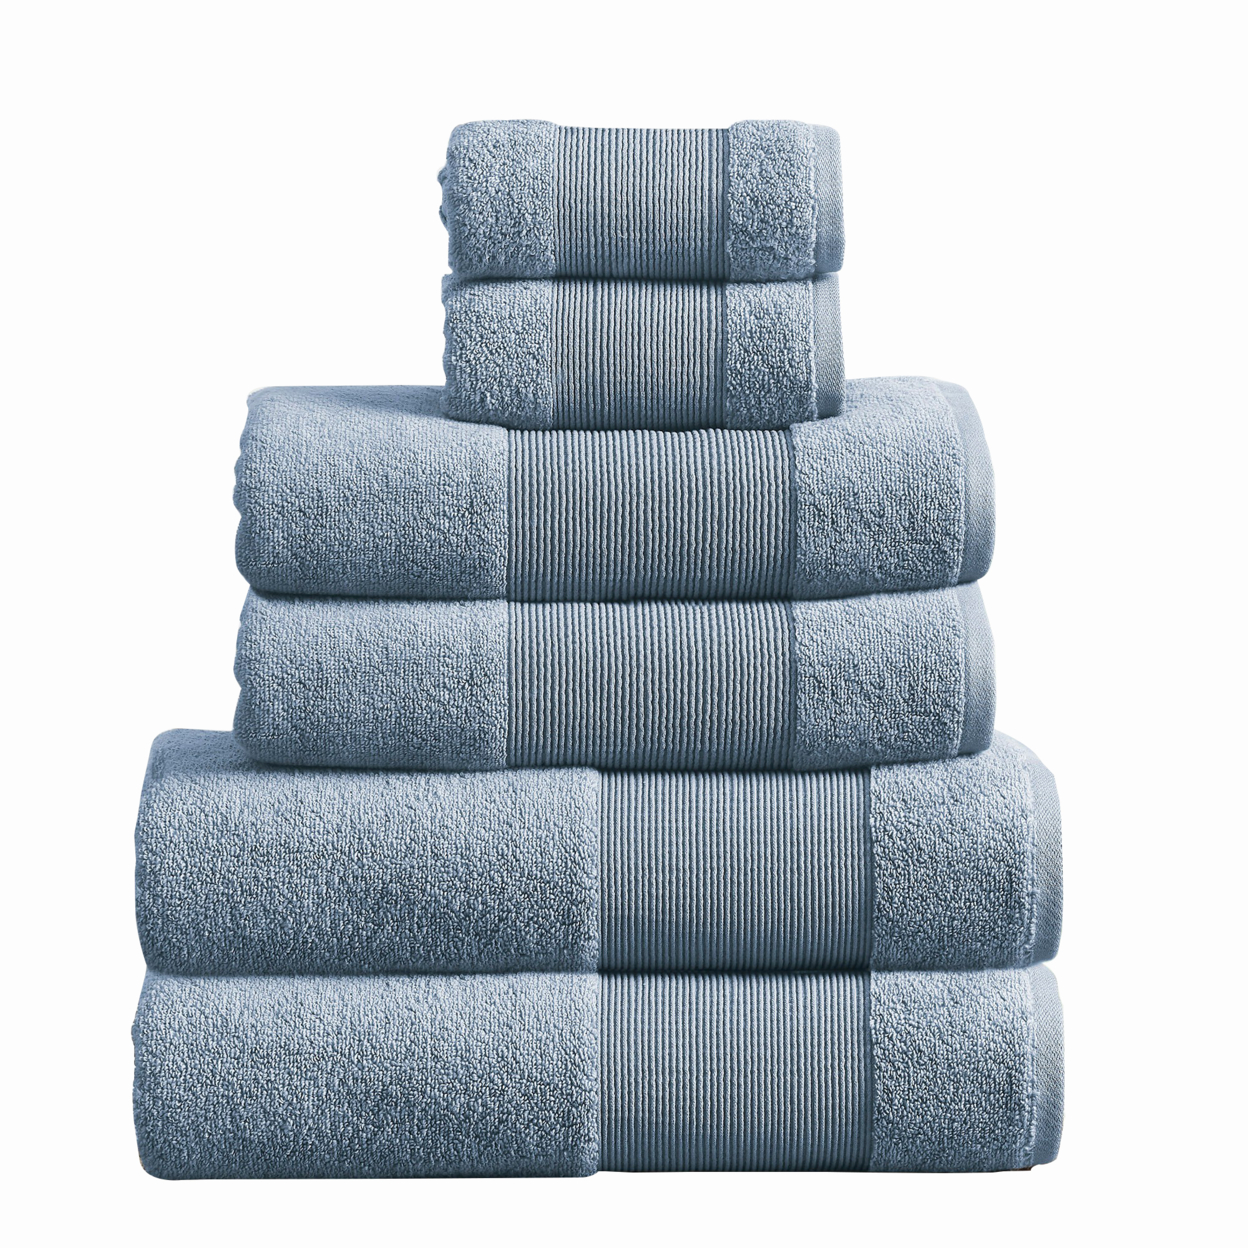 Indy Modern 6 Piece Cotton Towel Set, Softly Textured Design, Slate Blue- Saltoro Sherpi